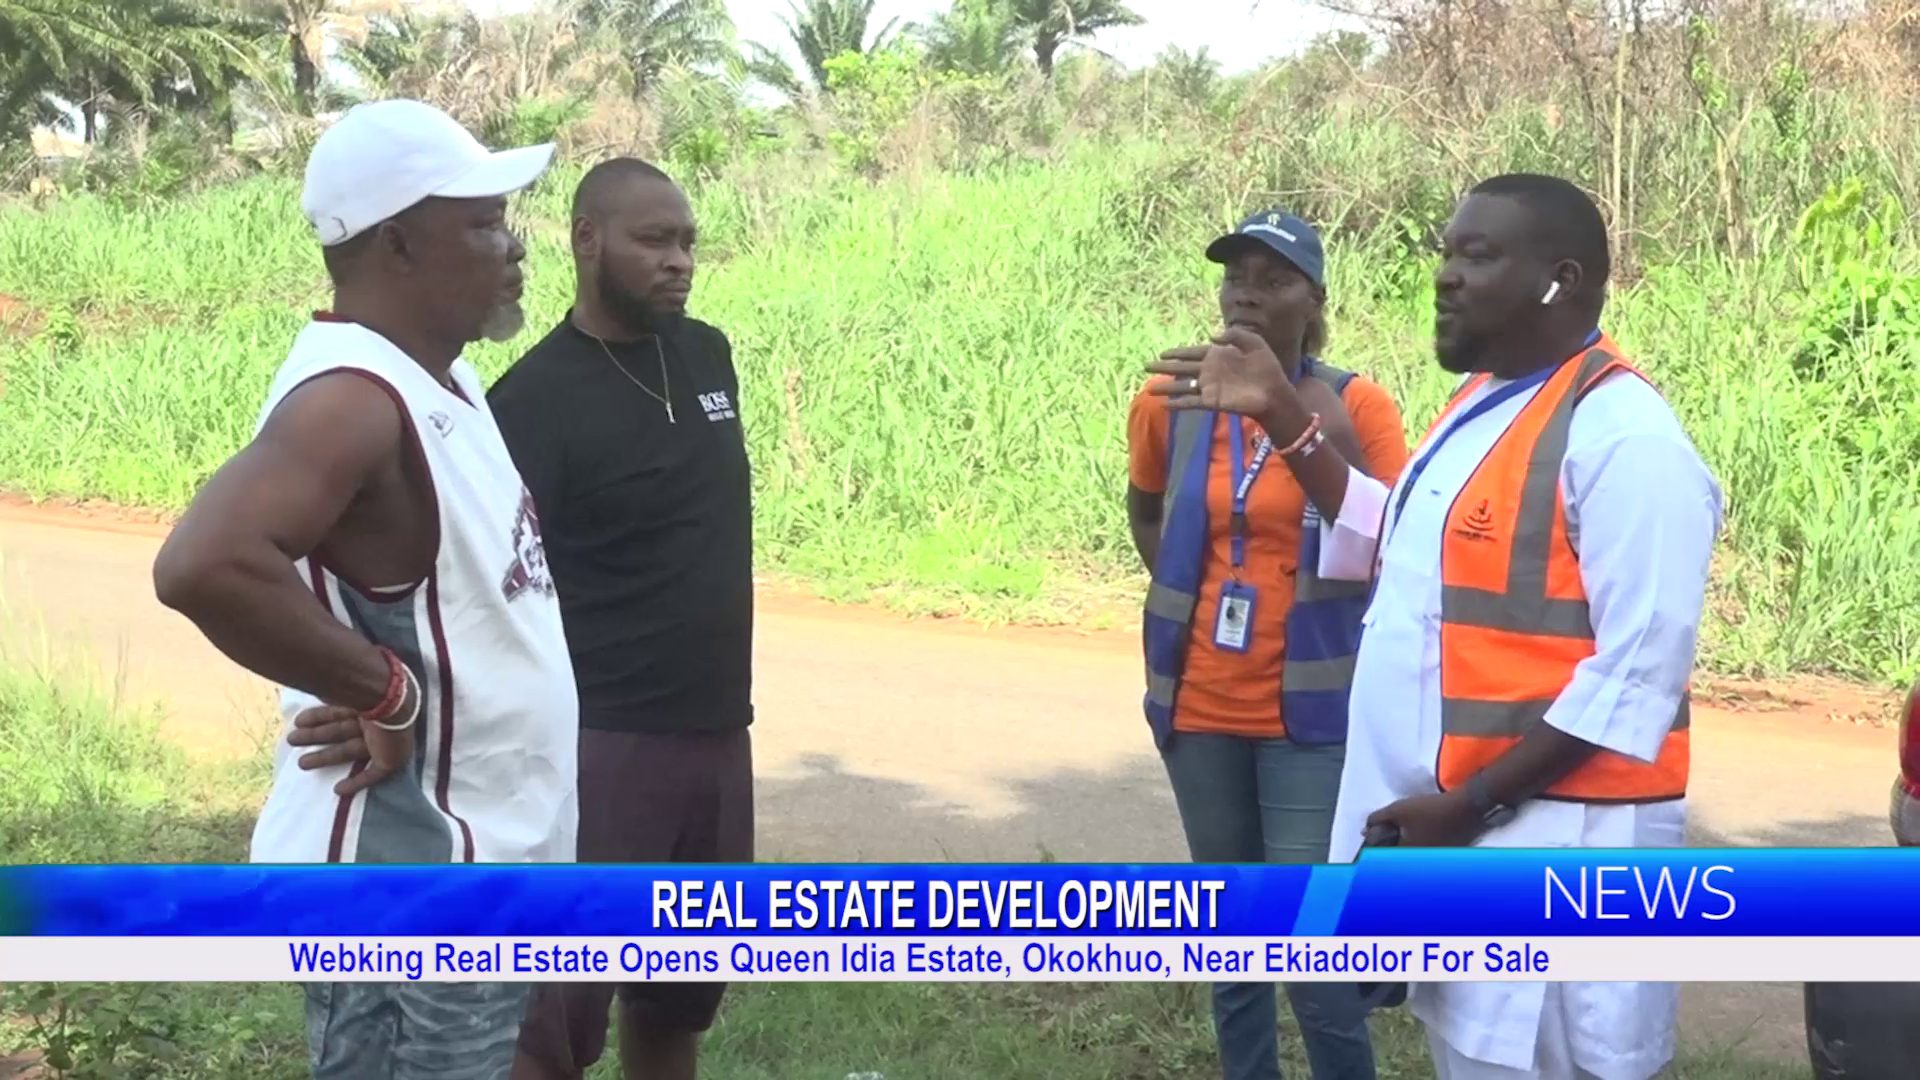 Webking Real Estate Opens Queen Idia Estate, Okokhuo, Near Ekiadolor For Sale